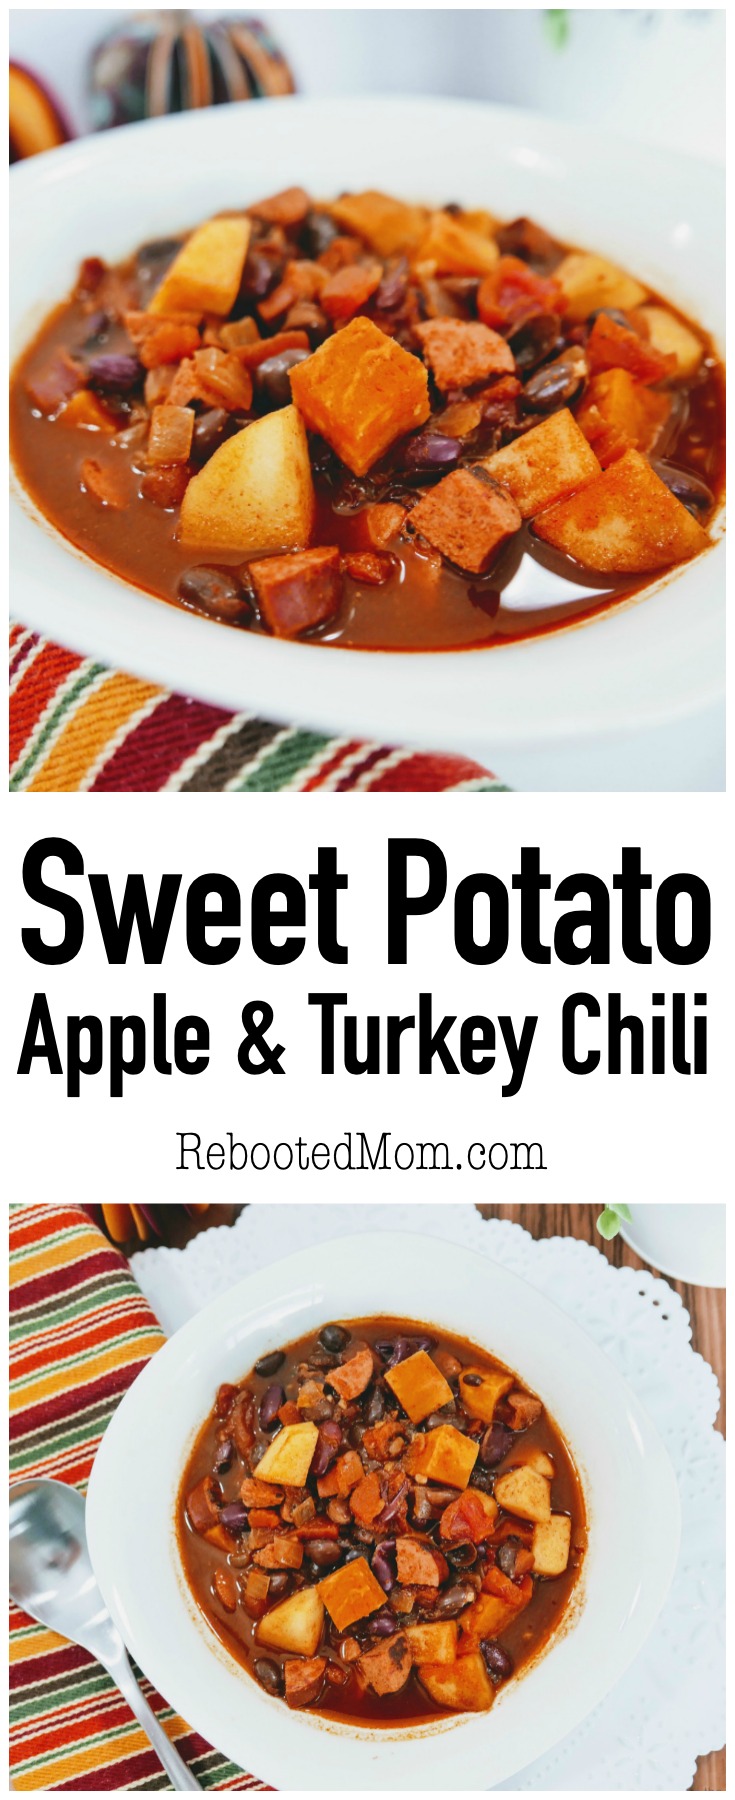 Sweet Potato, Apple & Turkey Chili